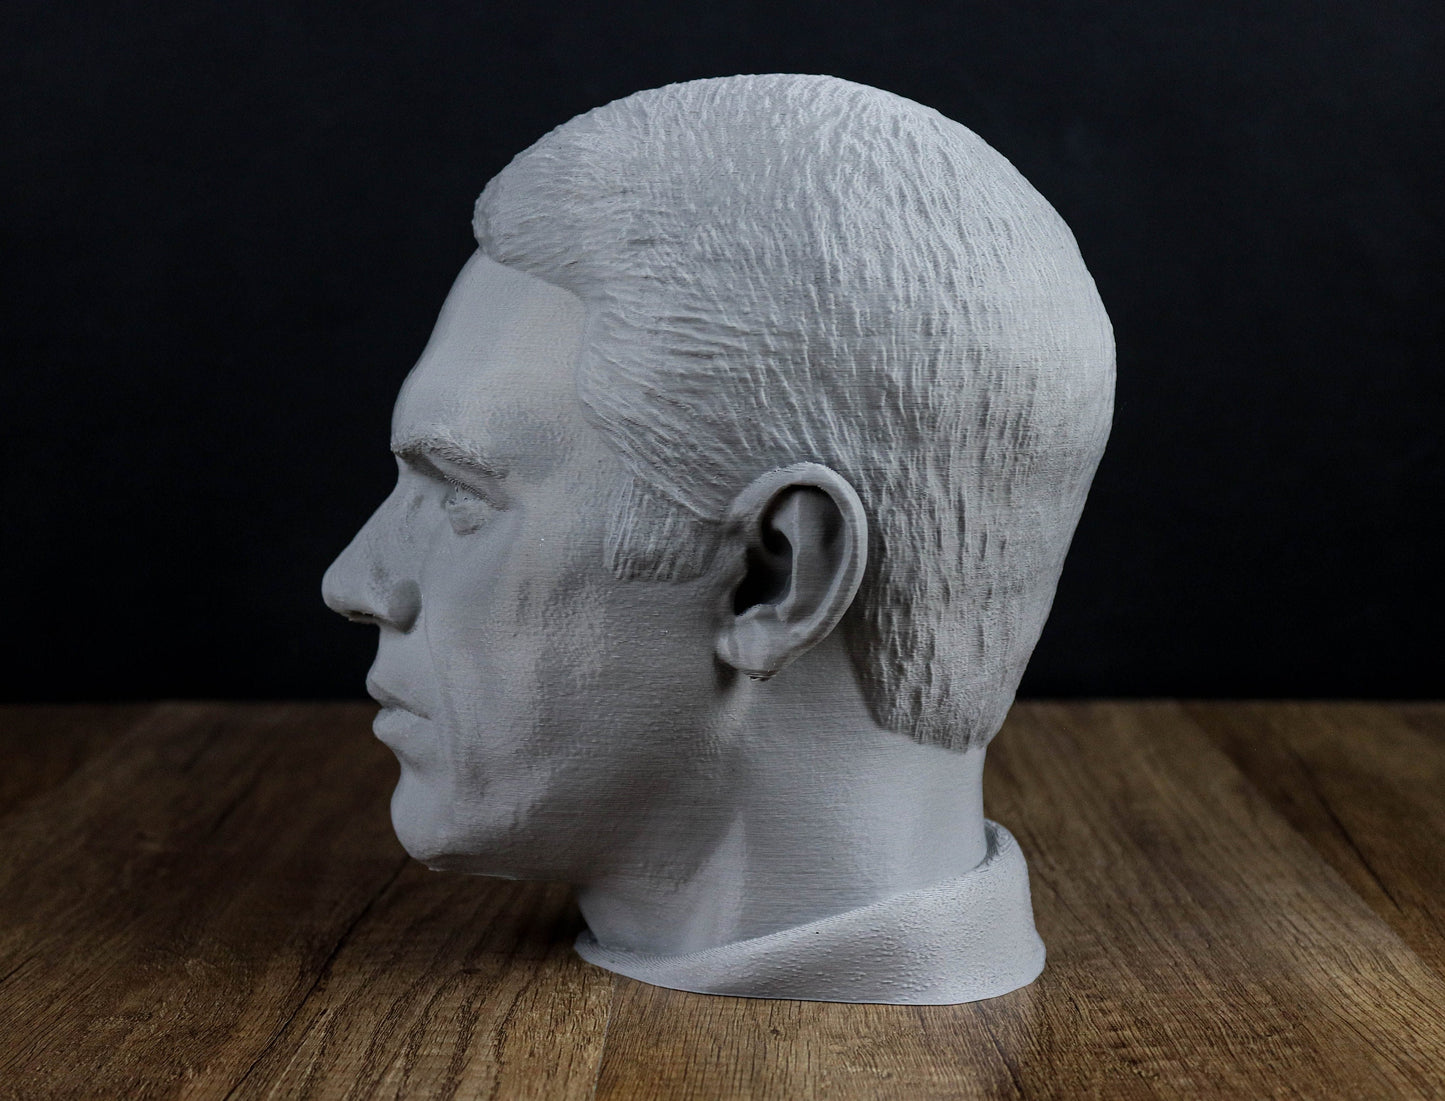 Steve McQueen Headphone Holder Bust, Headset Stand Figure, Room Decoration